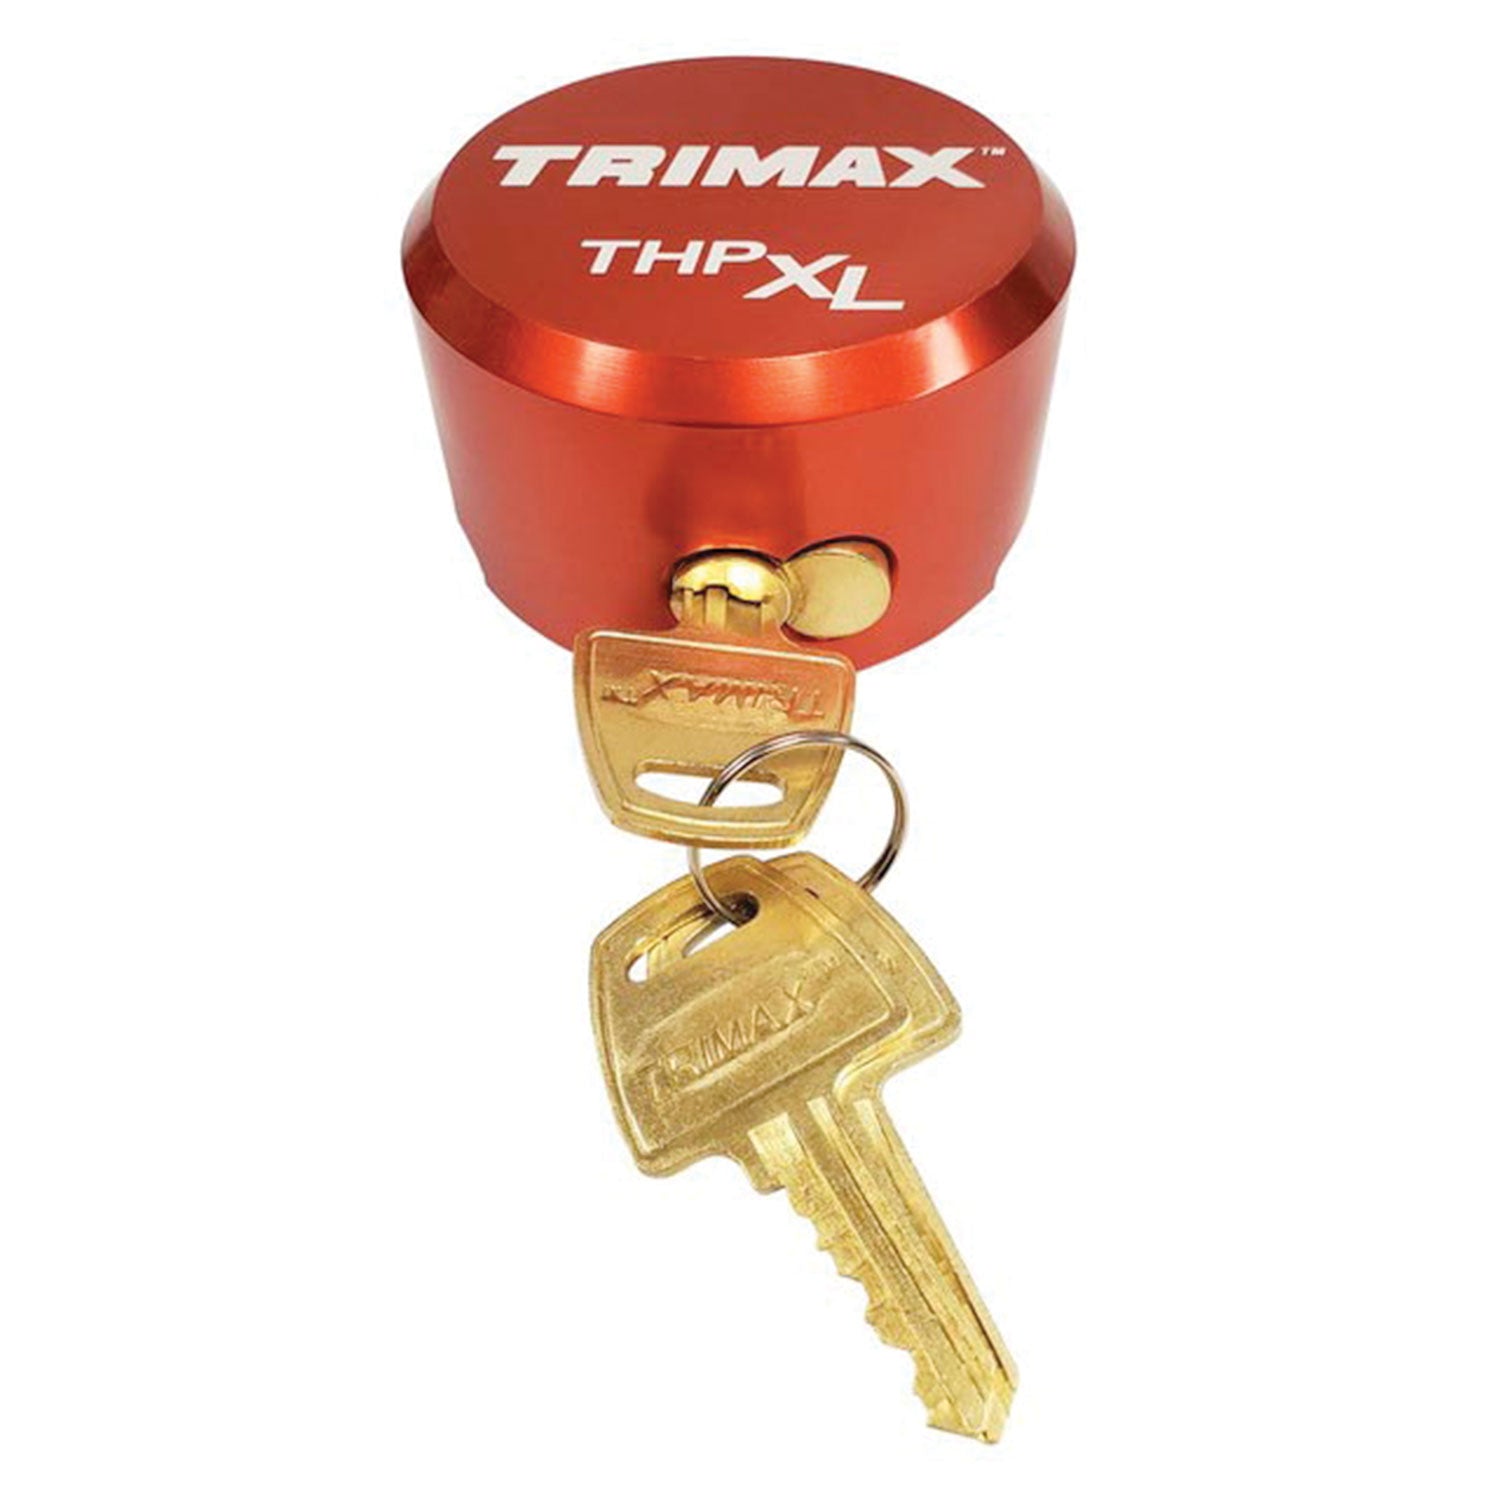 TRIMAX THPXL-AL RD Aluminum "Hockey Puck" Internal Shackle Padlock - Red